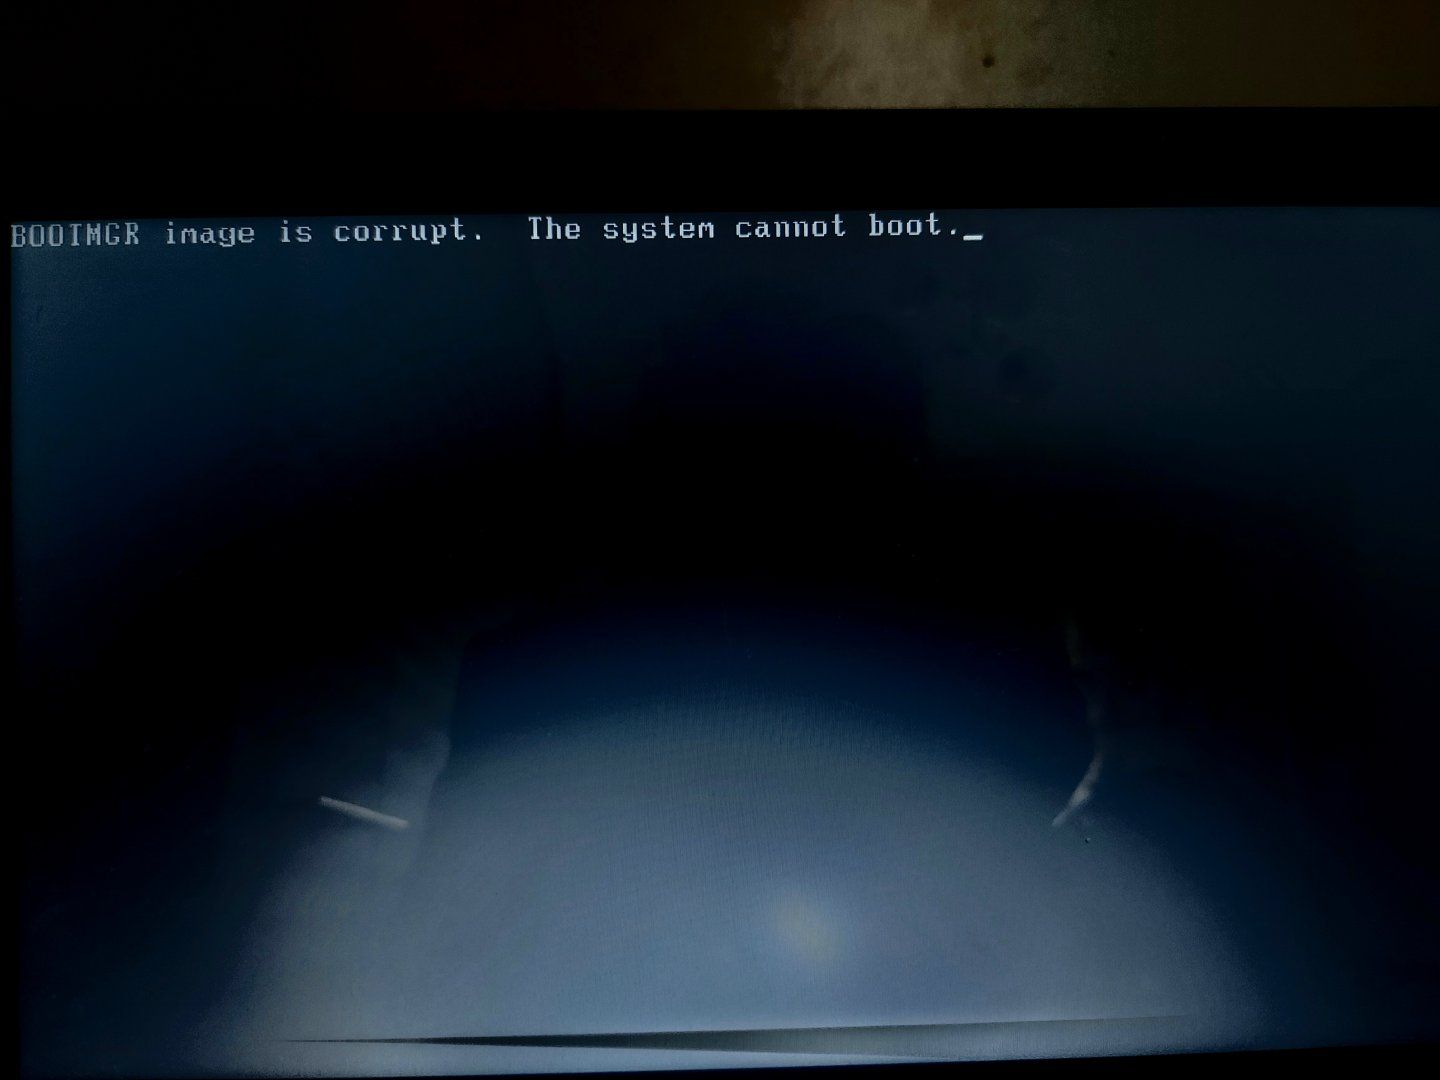 Çözüldü: "BOOTMGR image is corrupt. The System cannot boot" hatası |  Technopat Sosyal